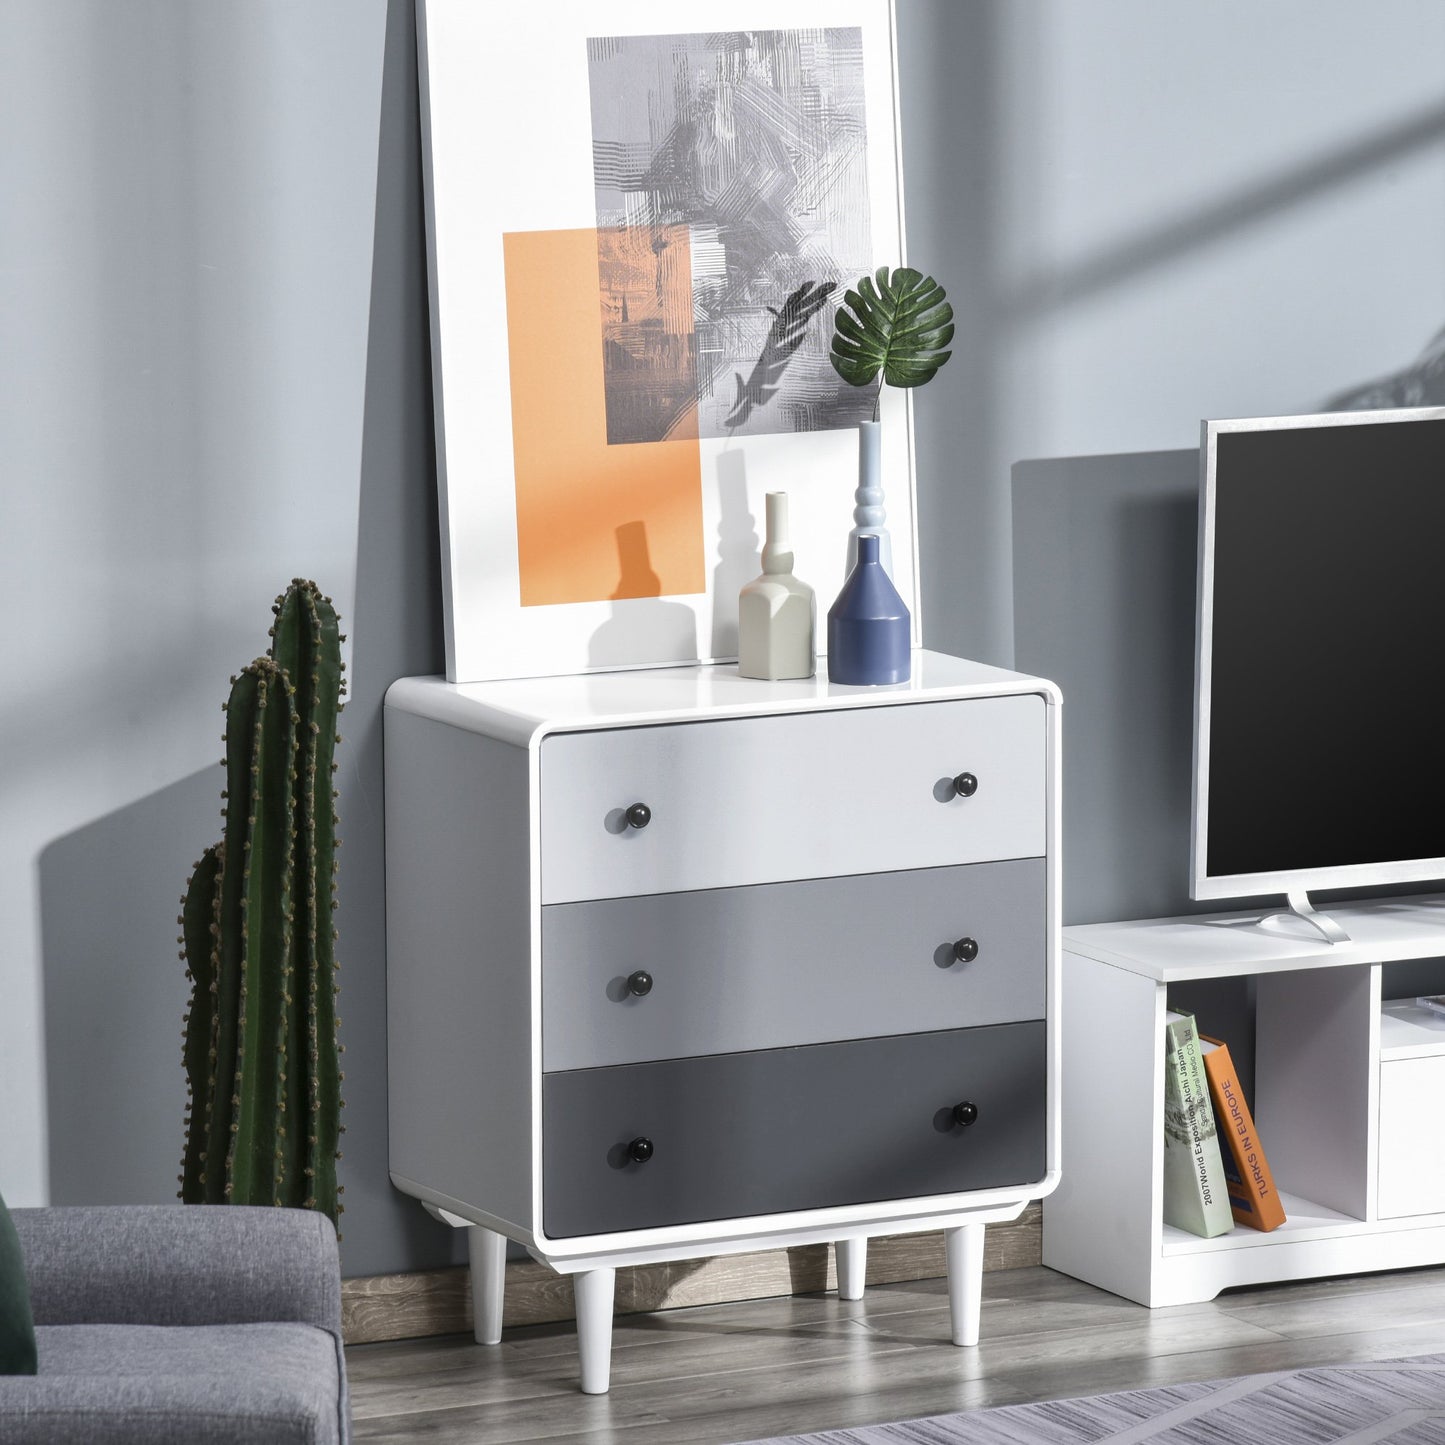 HOMCOM Nordic Side Cabinet Home Organizer w/ 3 Storage Drawer for Bedroom, Living Room